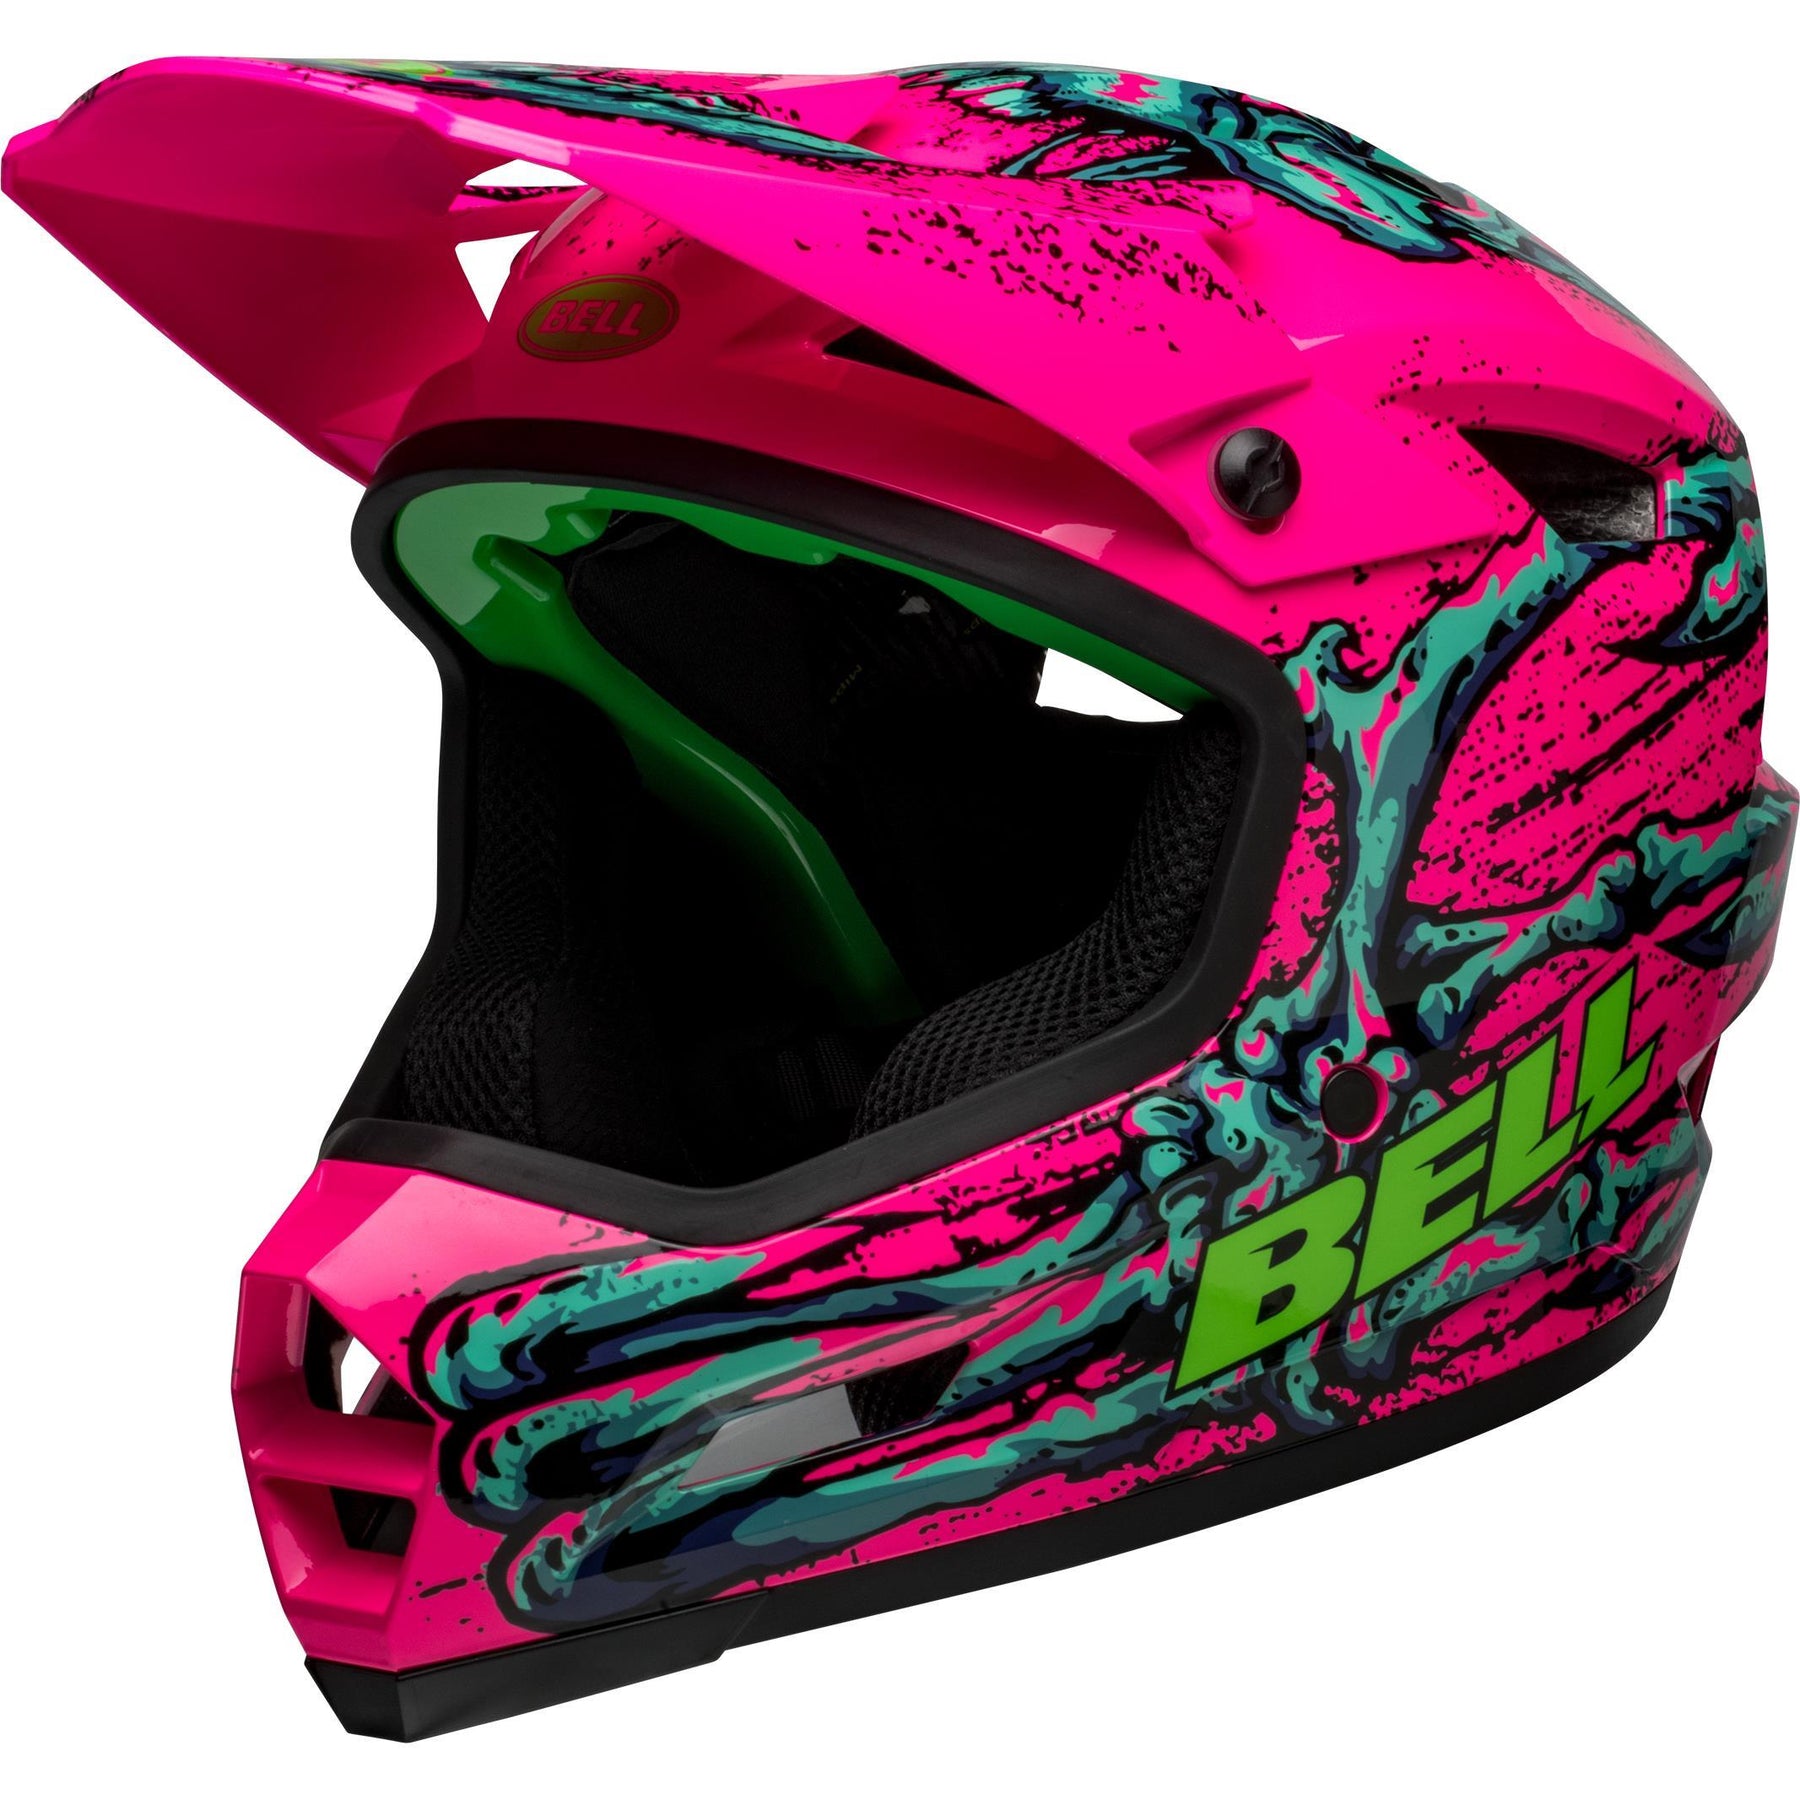 Bell Sanction 2 DLX MIPS MTB Full Face Helmet Bonehead Gloss Pink/Turquoise XL 59-61CM